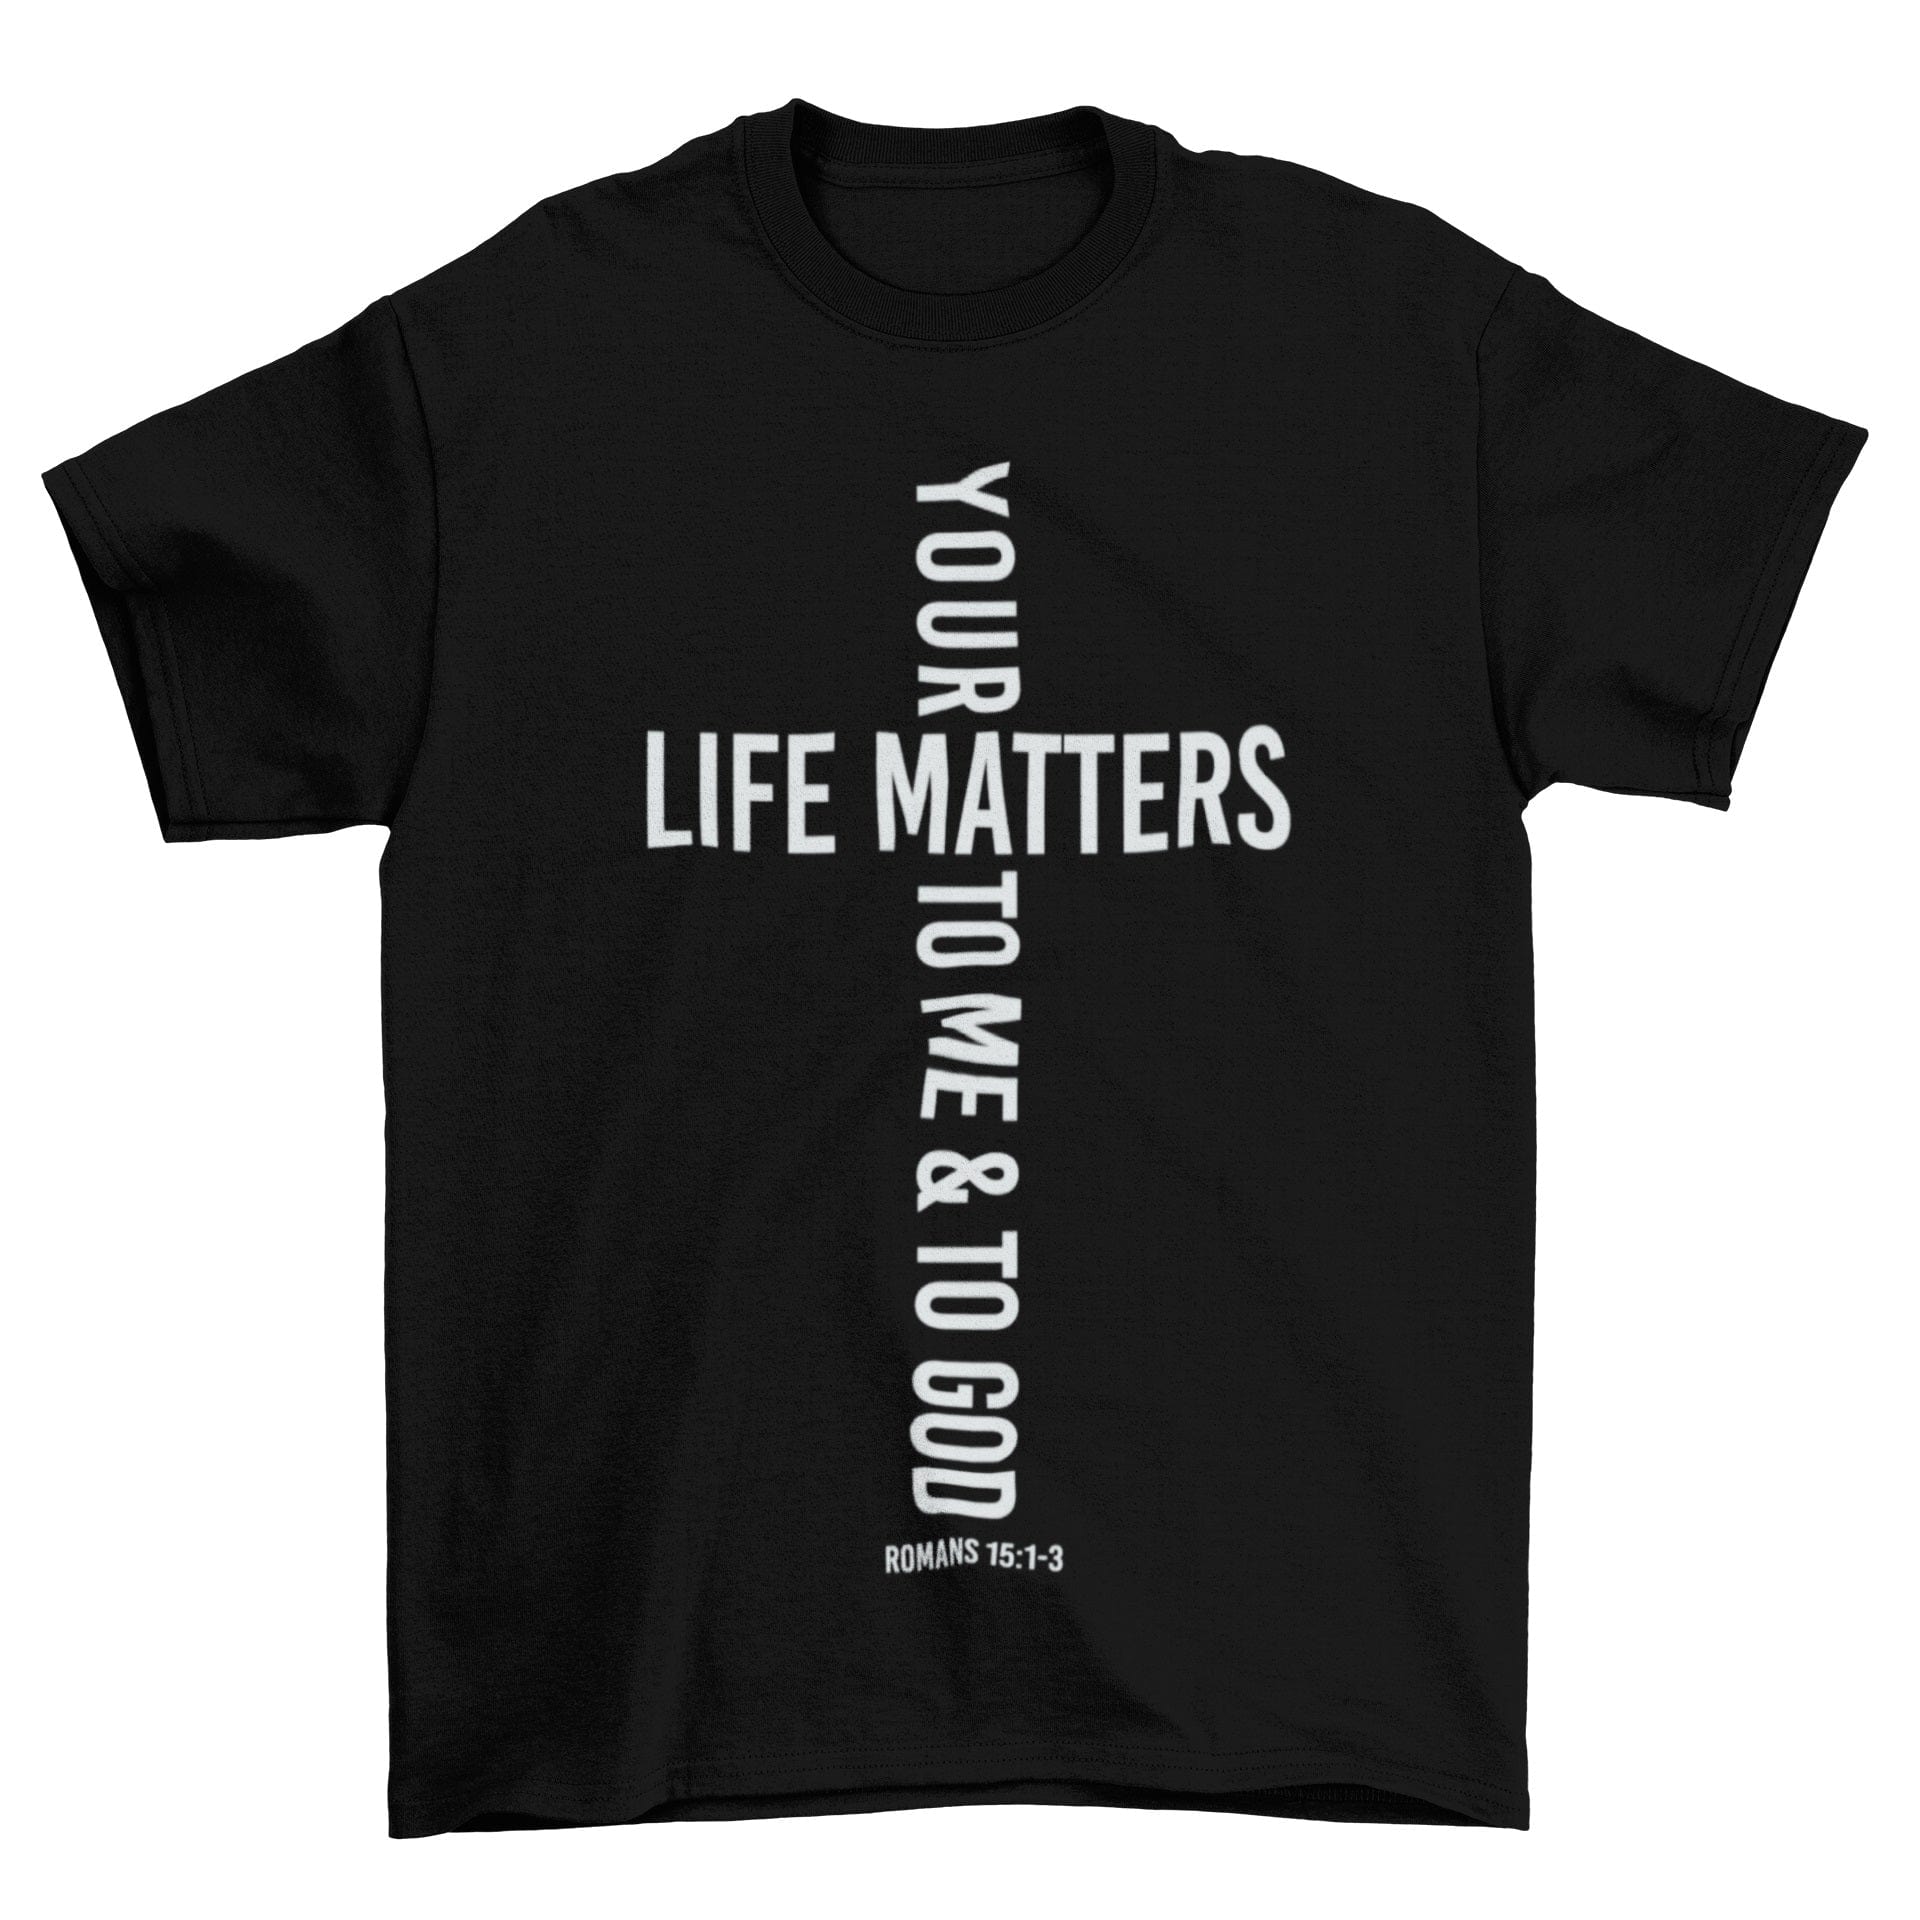 Wrighteous Wear T-Shirt S / Black Your Life Matters Unisex Christian T-shirt